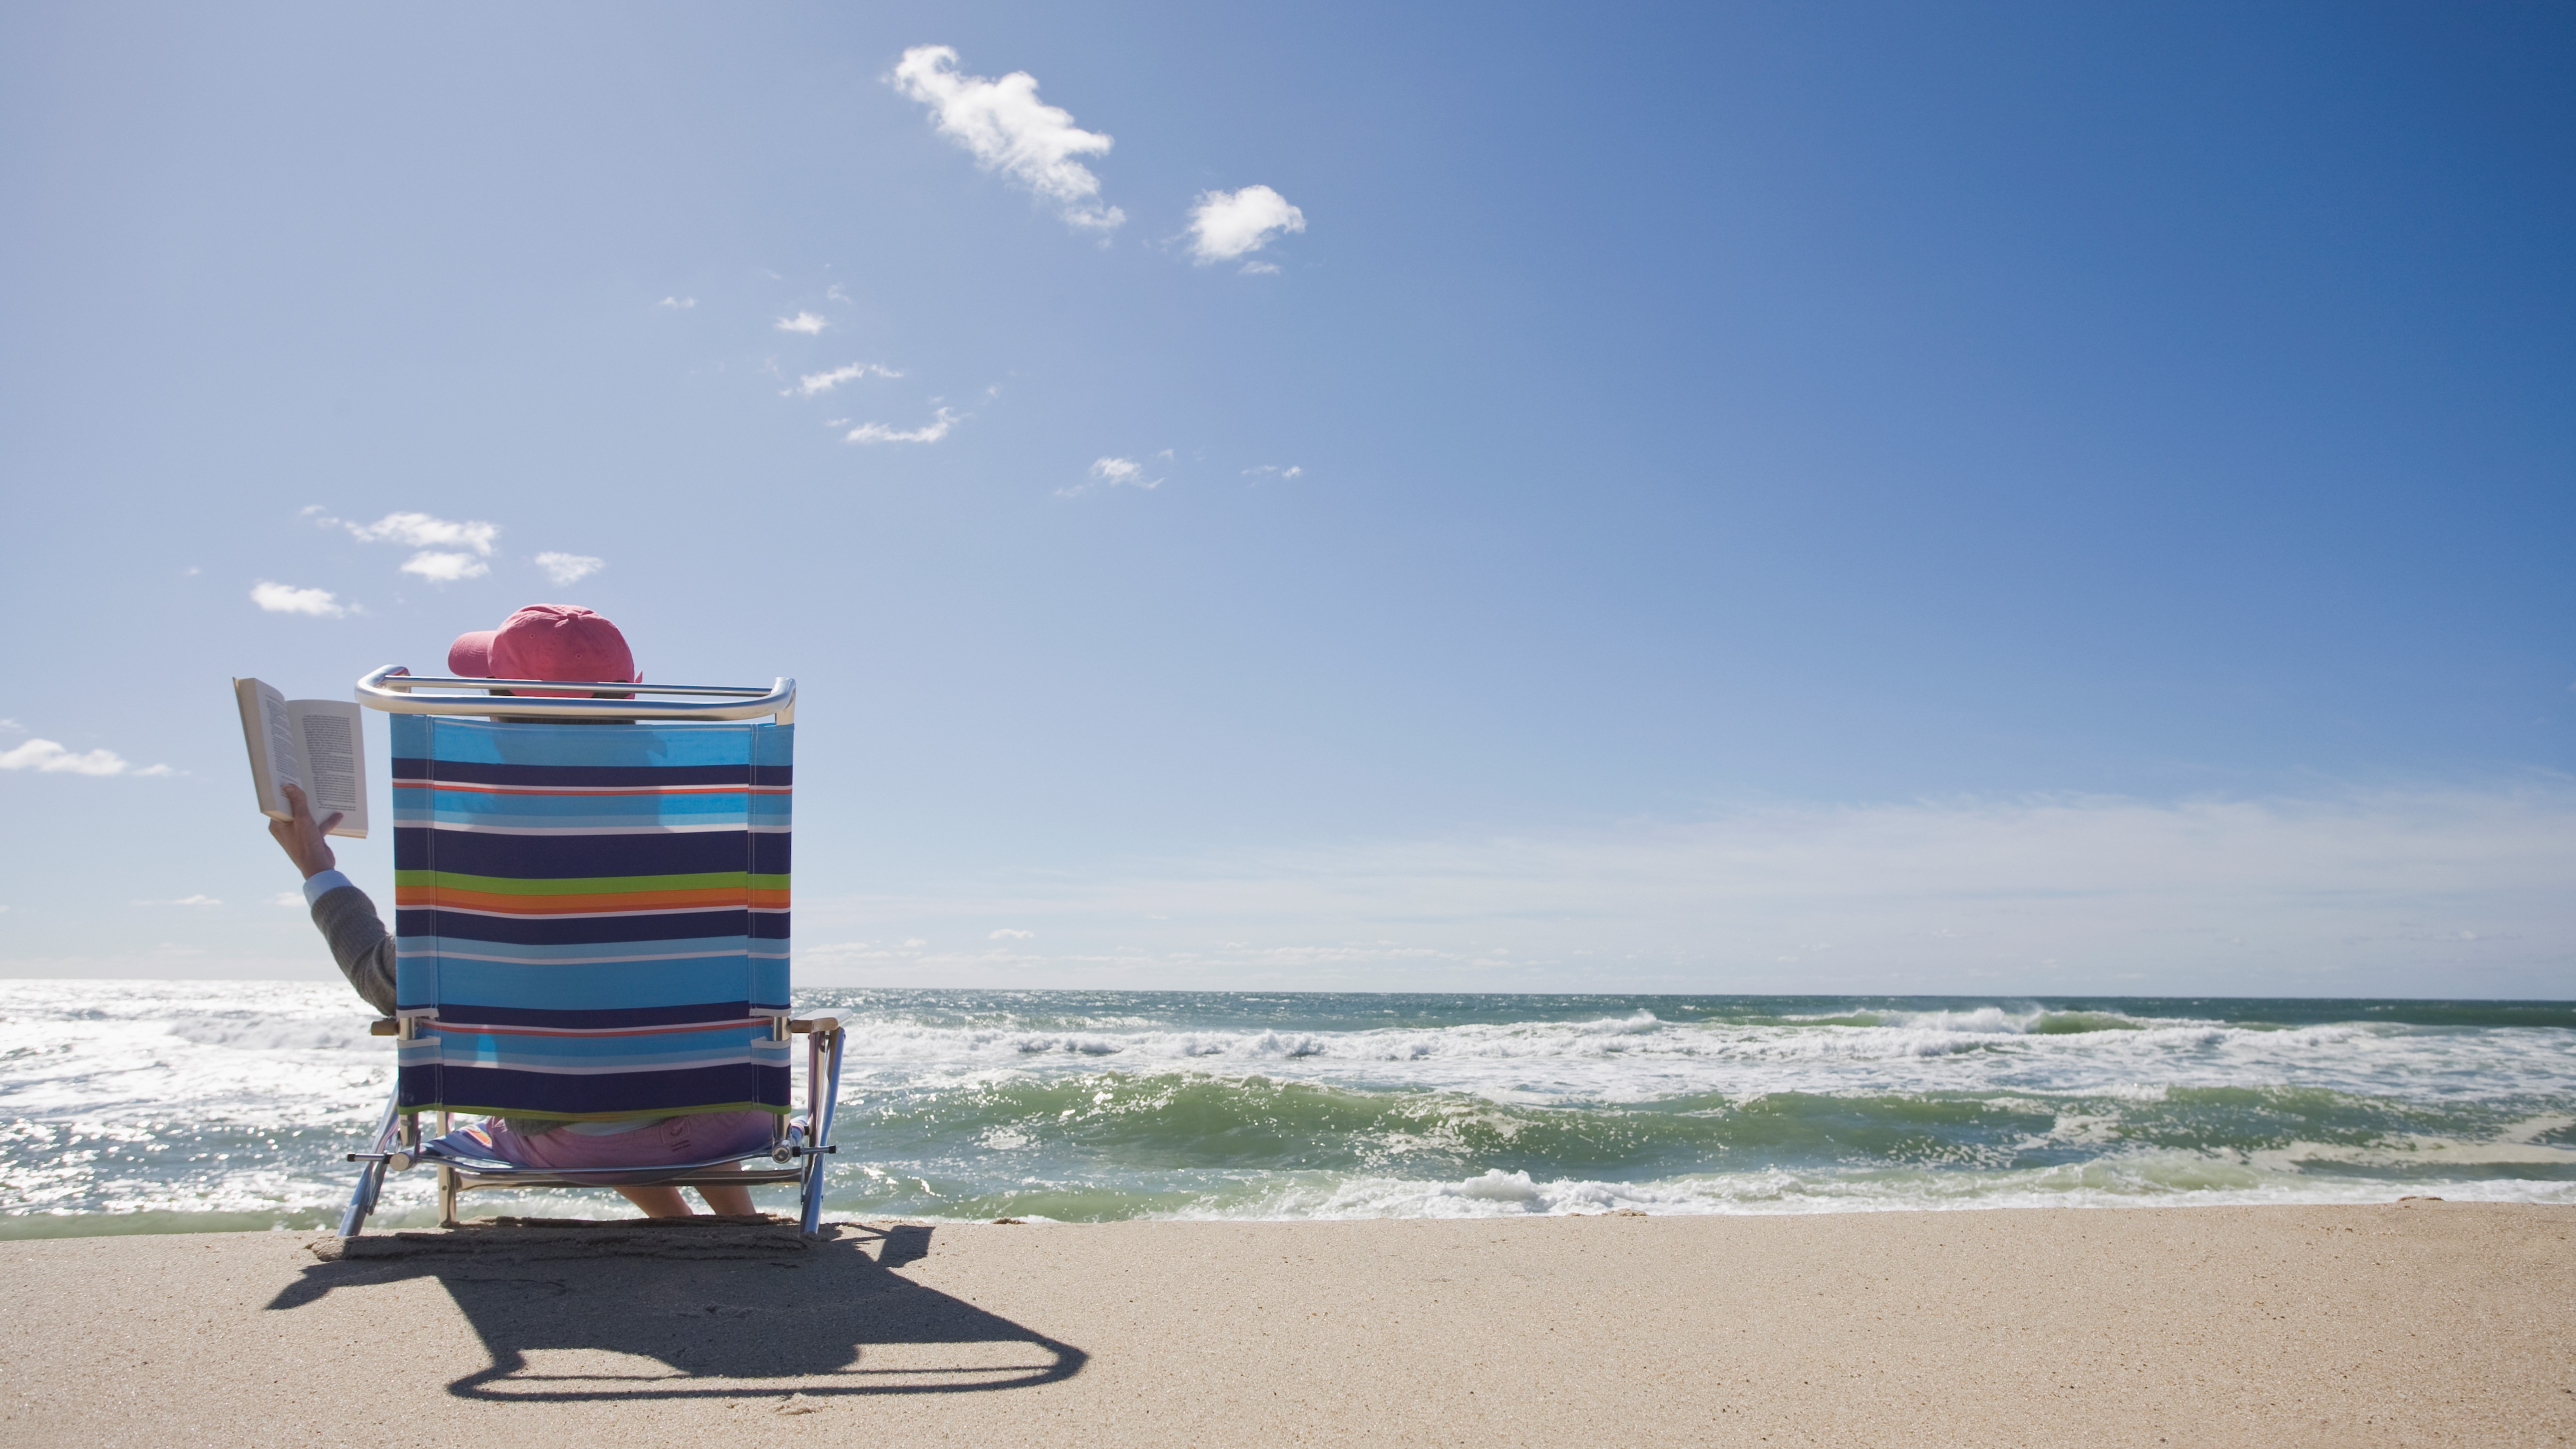 Topless Beaches In California - Nantucket Topless Beach Proposal Passes â€“ NBC Boston